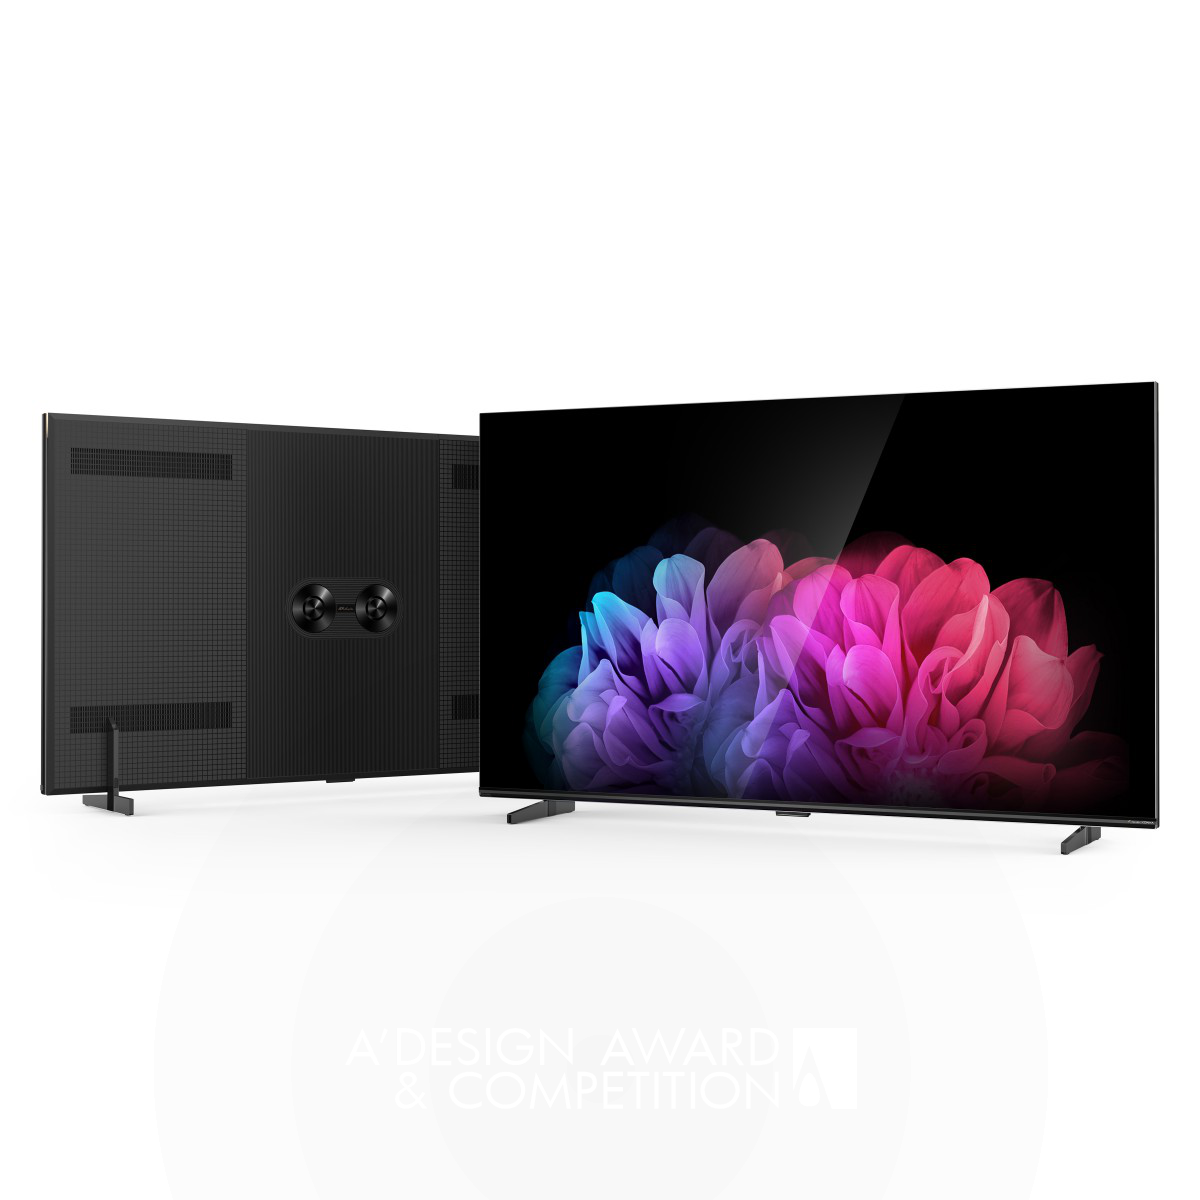 A8 Series Miniled TV by Konka Industrial Design Team